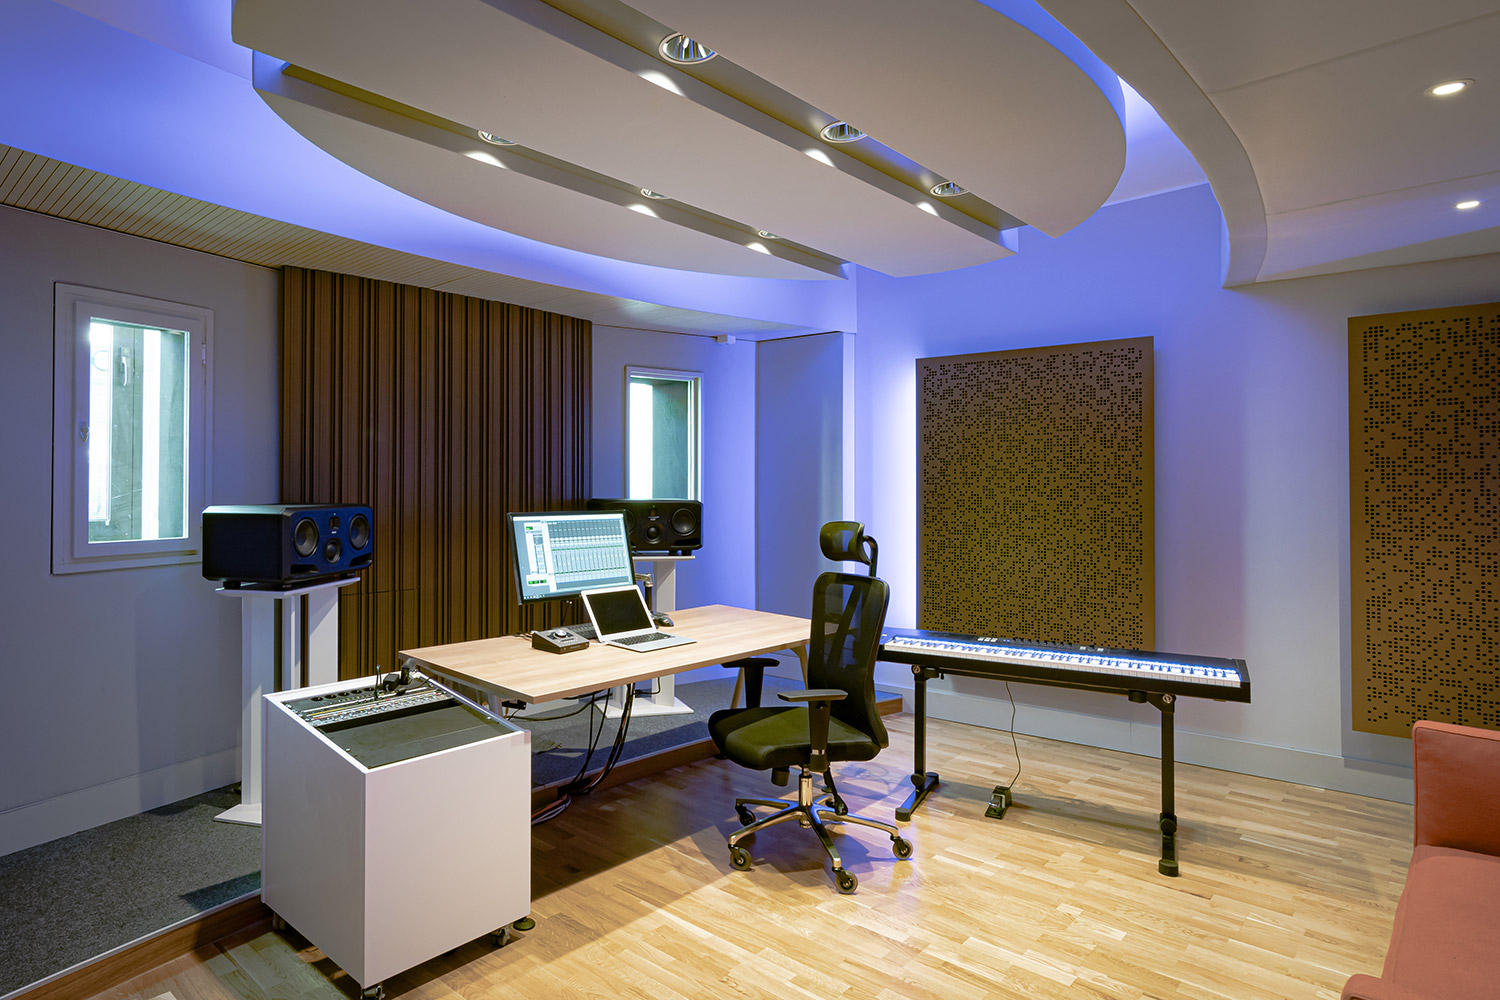 Vienna City Sound Control Room B Recording Studio in Austria designed by WSDG.